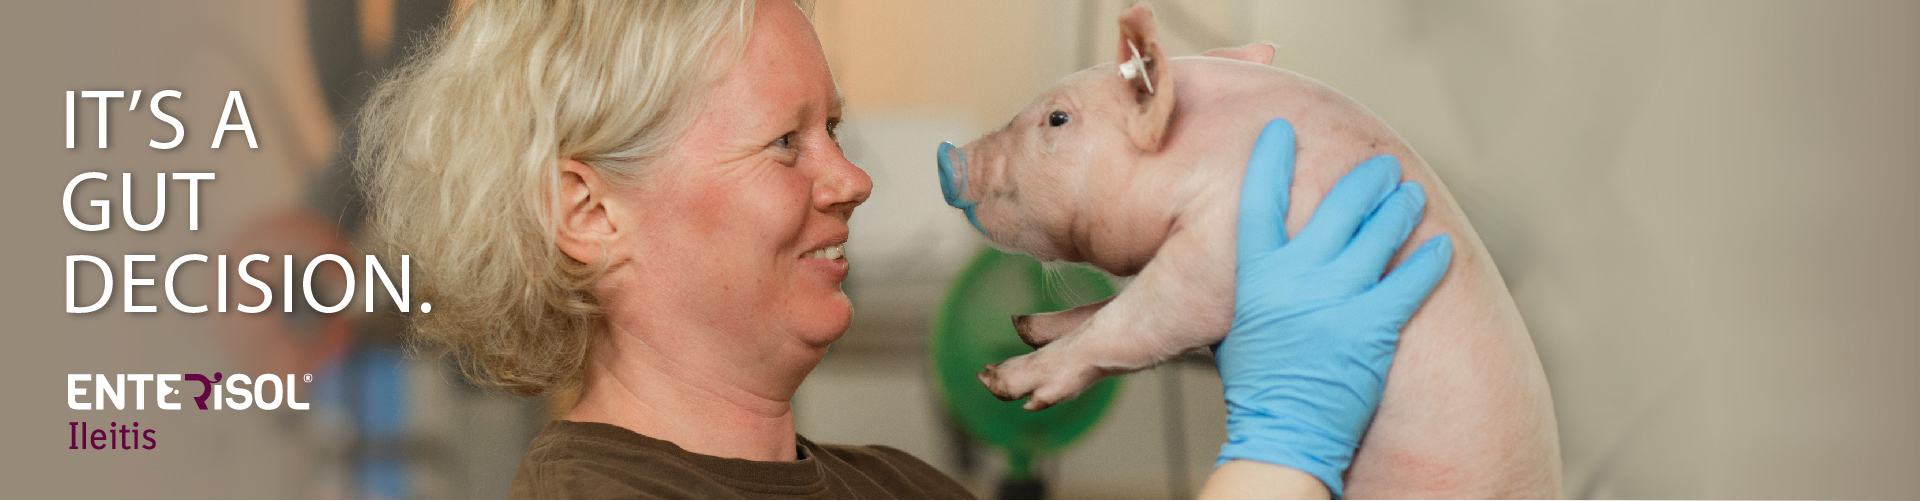 Enterisol Ileitis 'It's a Gut Decision' image with woman holding piglet